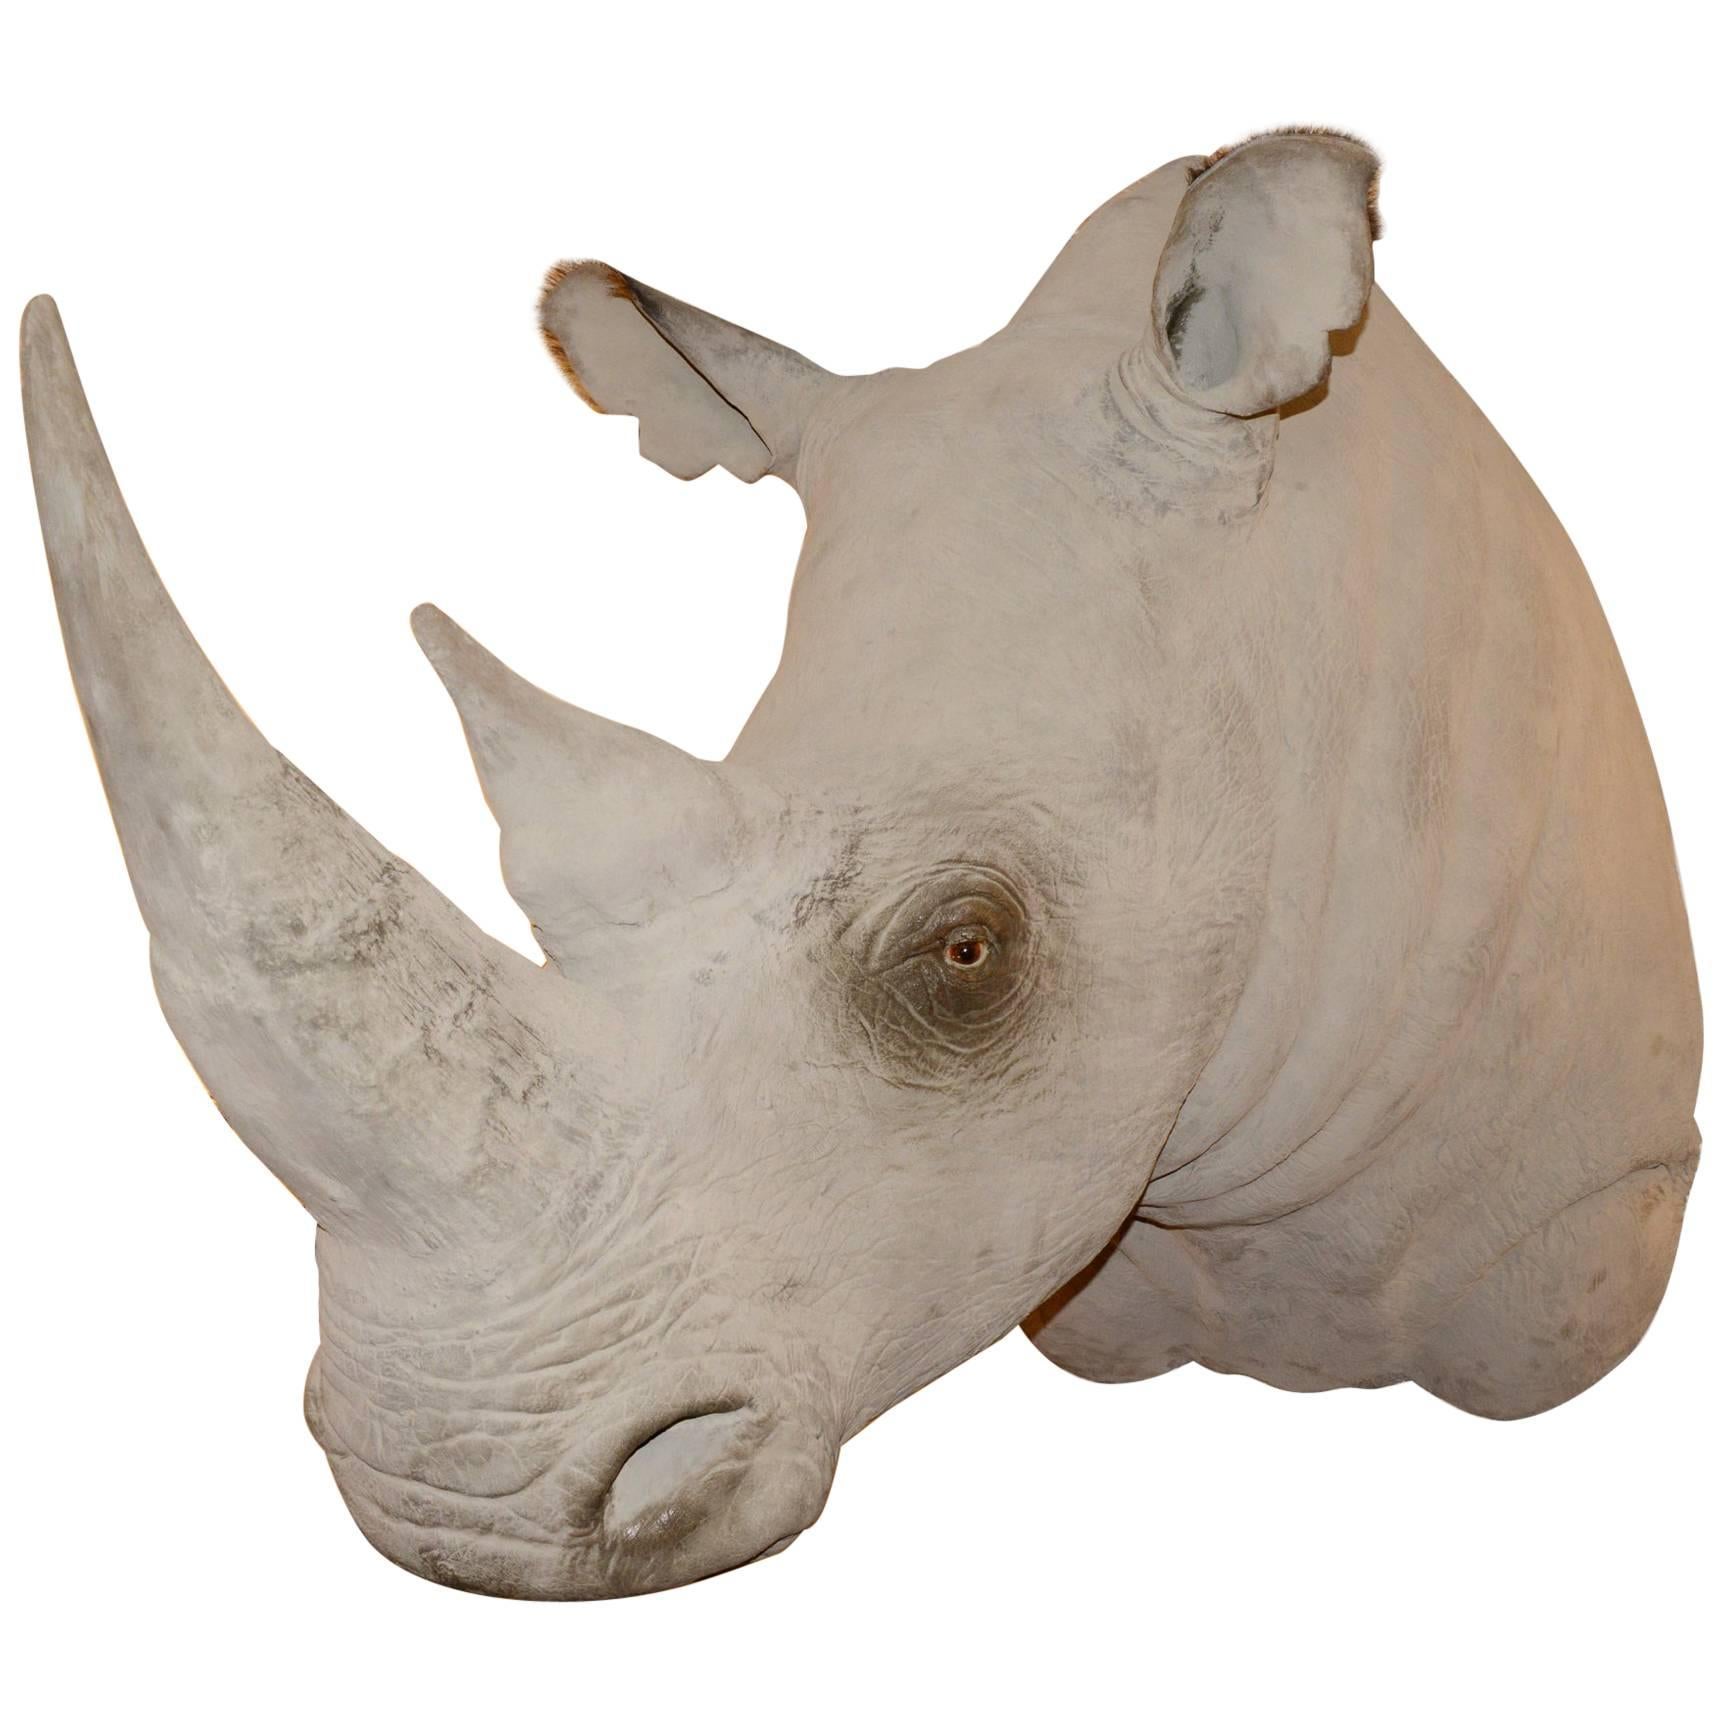 Rhinoceros Head Sculpture in Fiberglass Exceptional Finishing